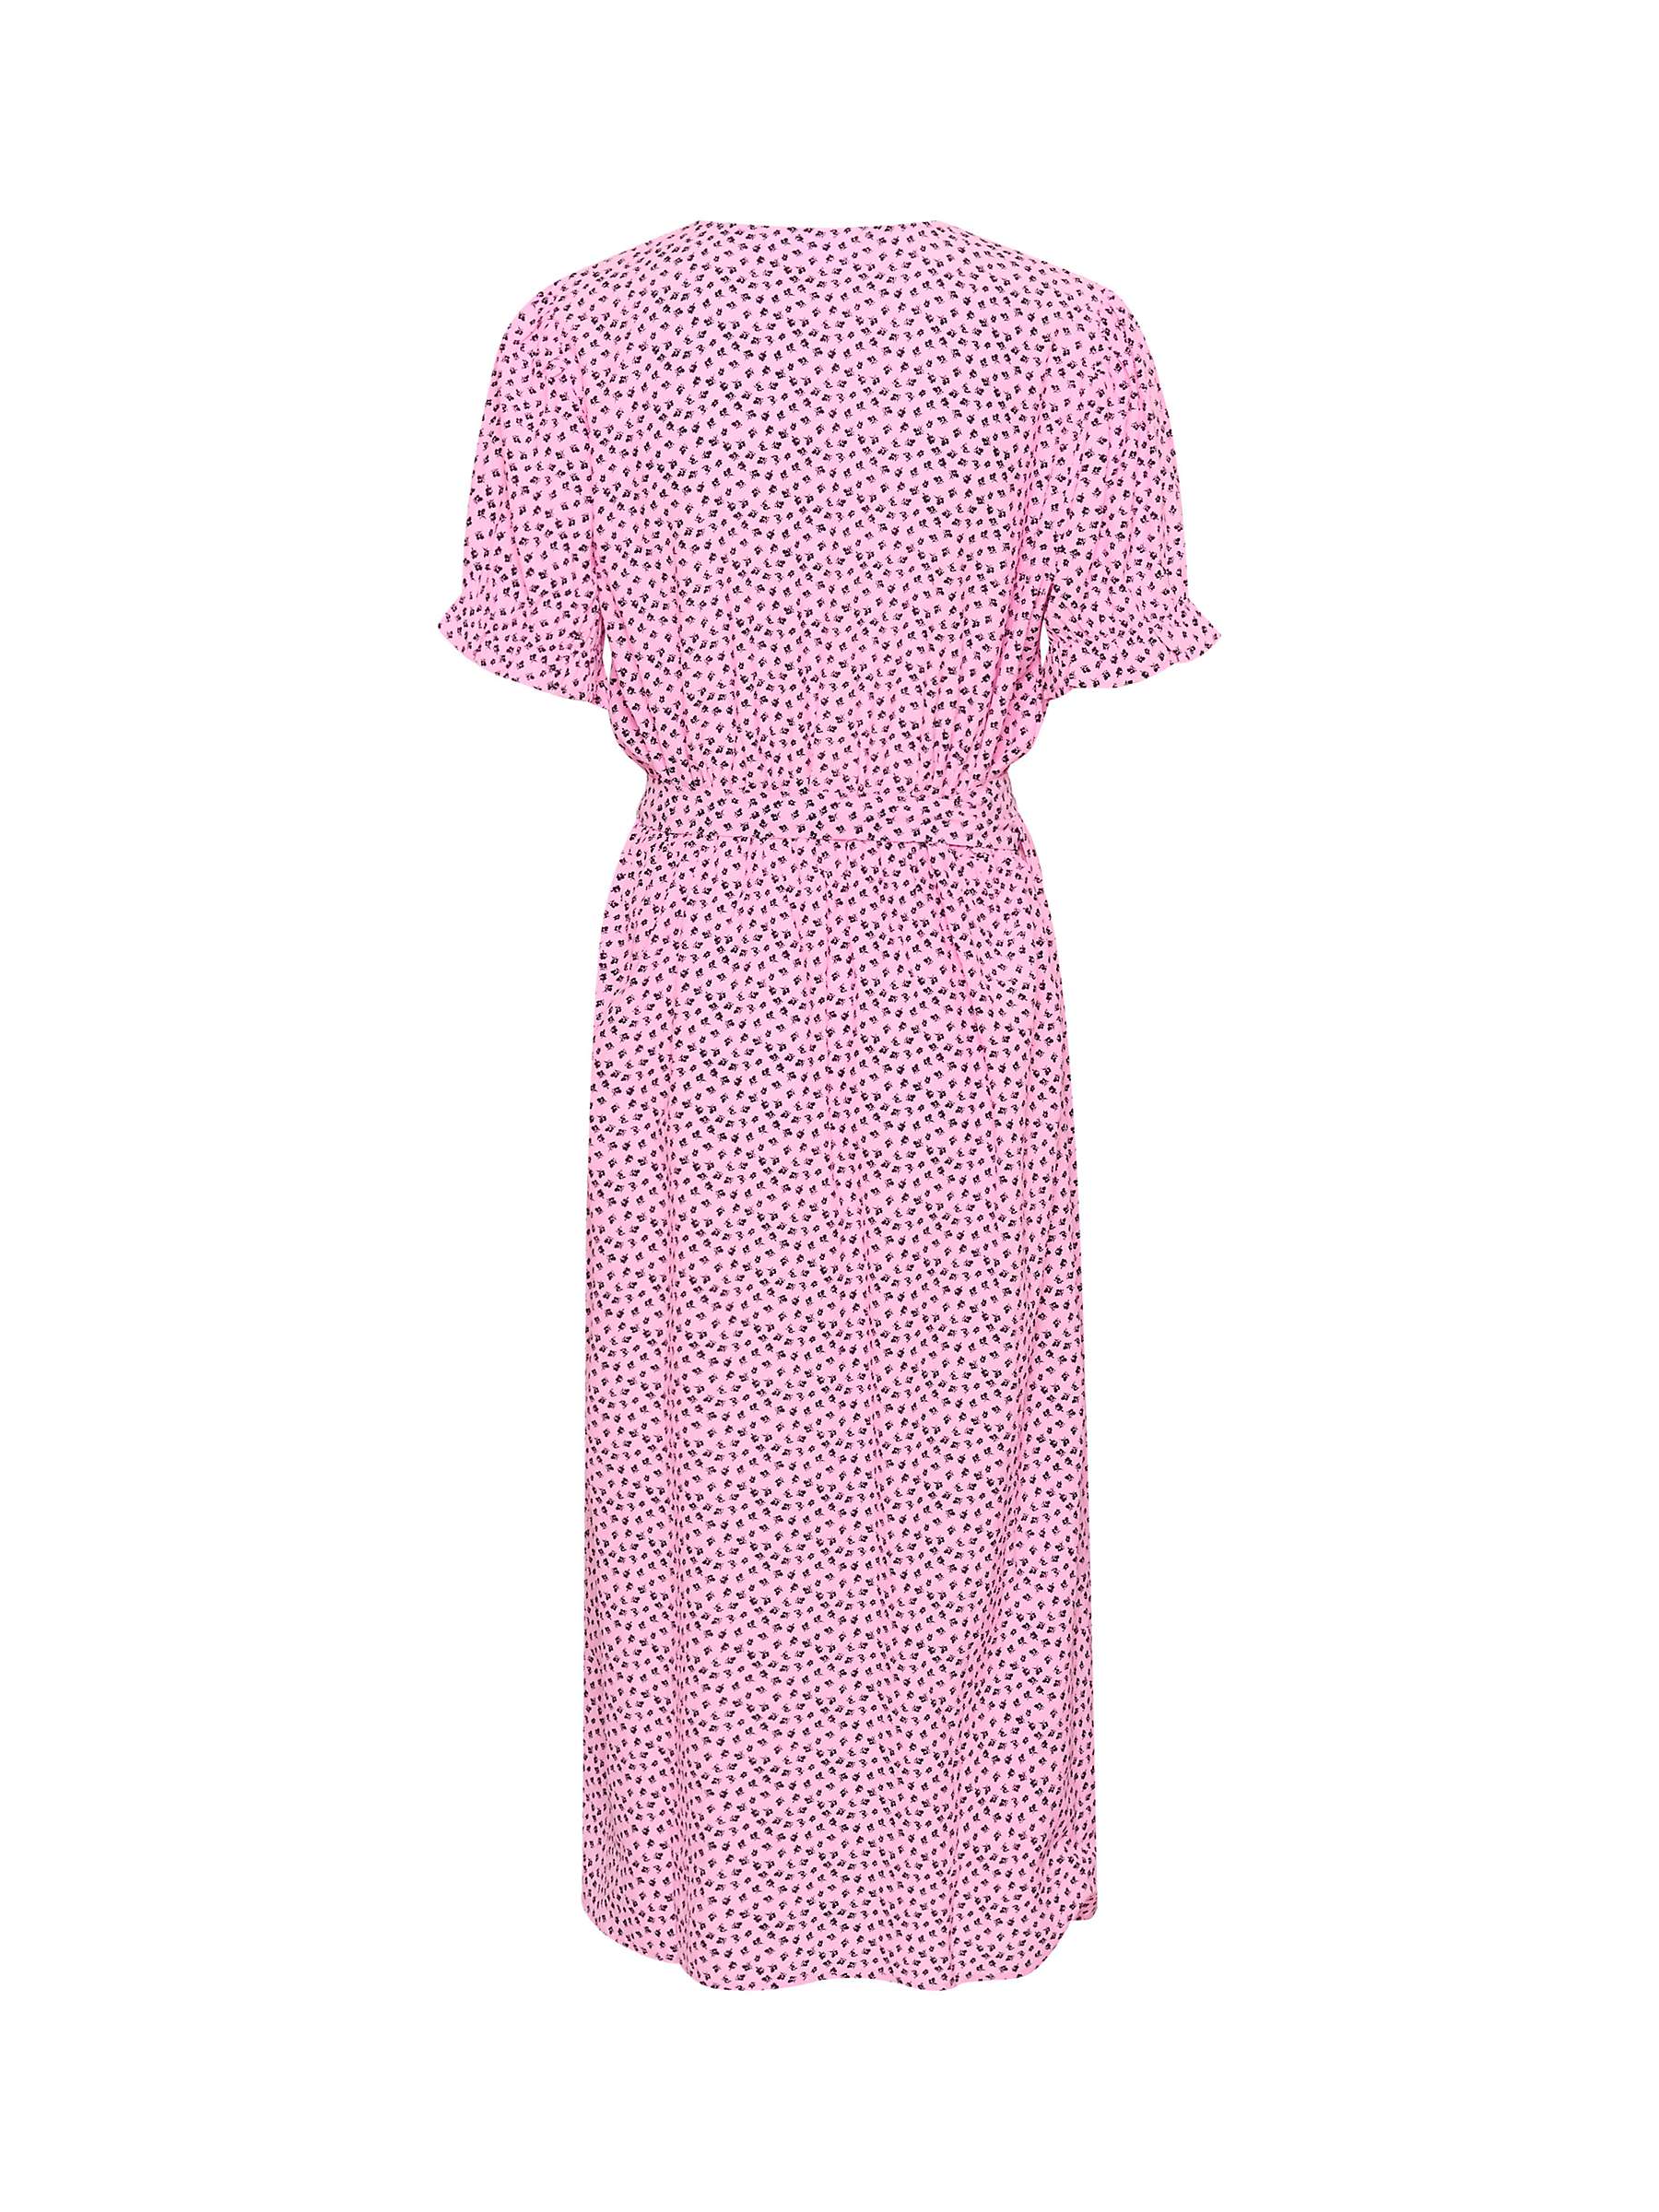 Buy Saint Tropez Zanni Short Sleeve V-Neck Wrap Dress, Pink Frosting Online at johnlewis.com